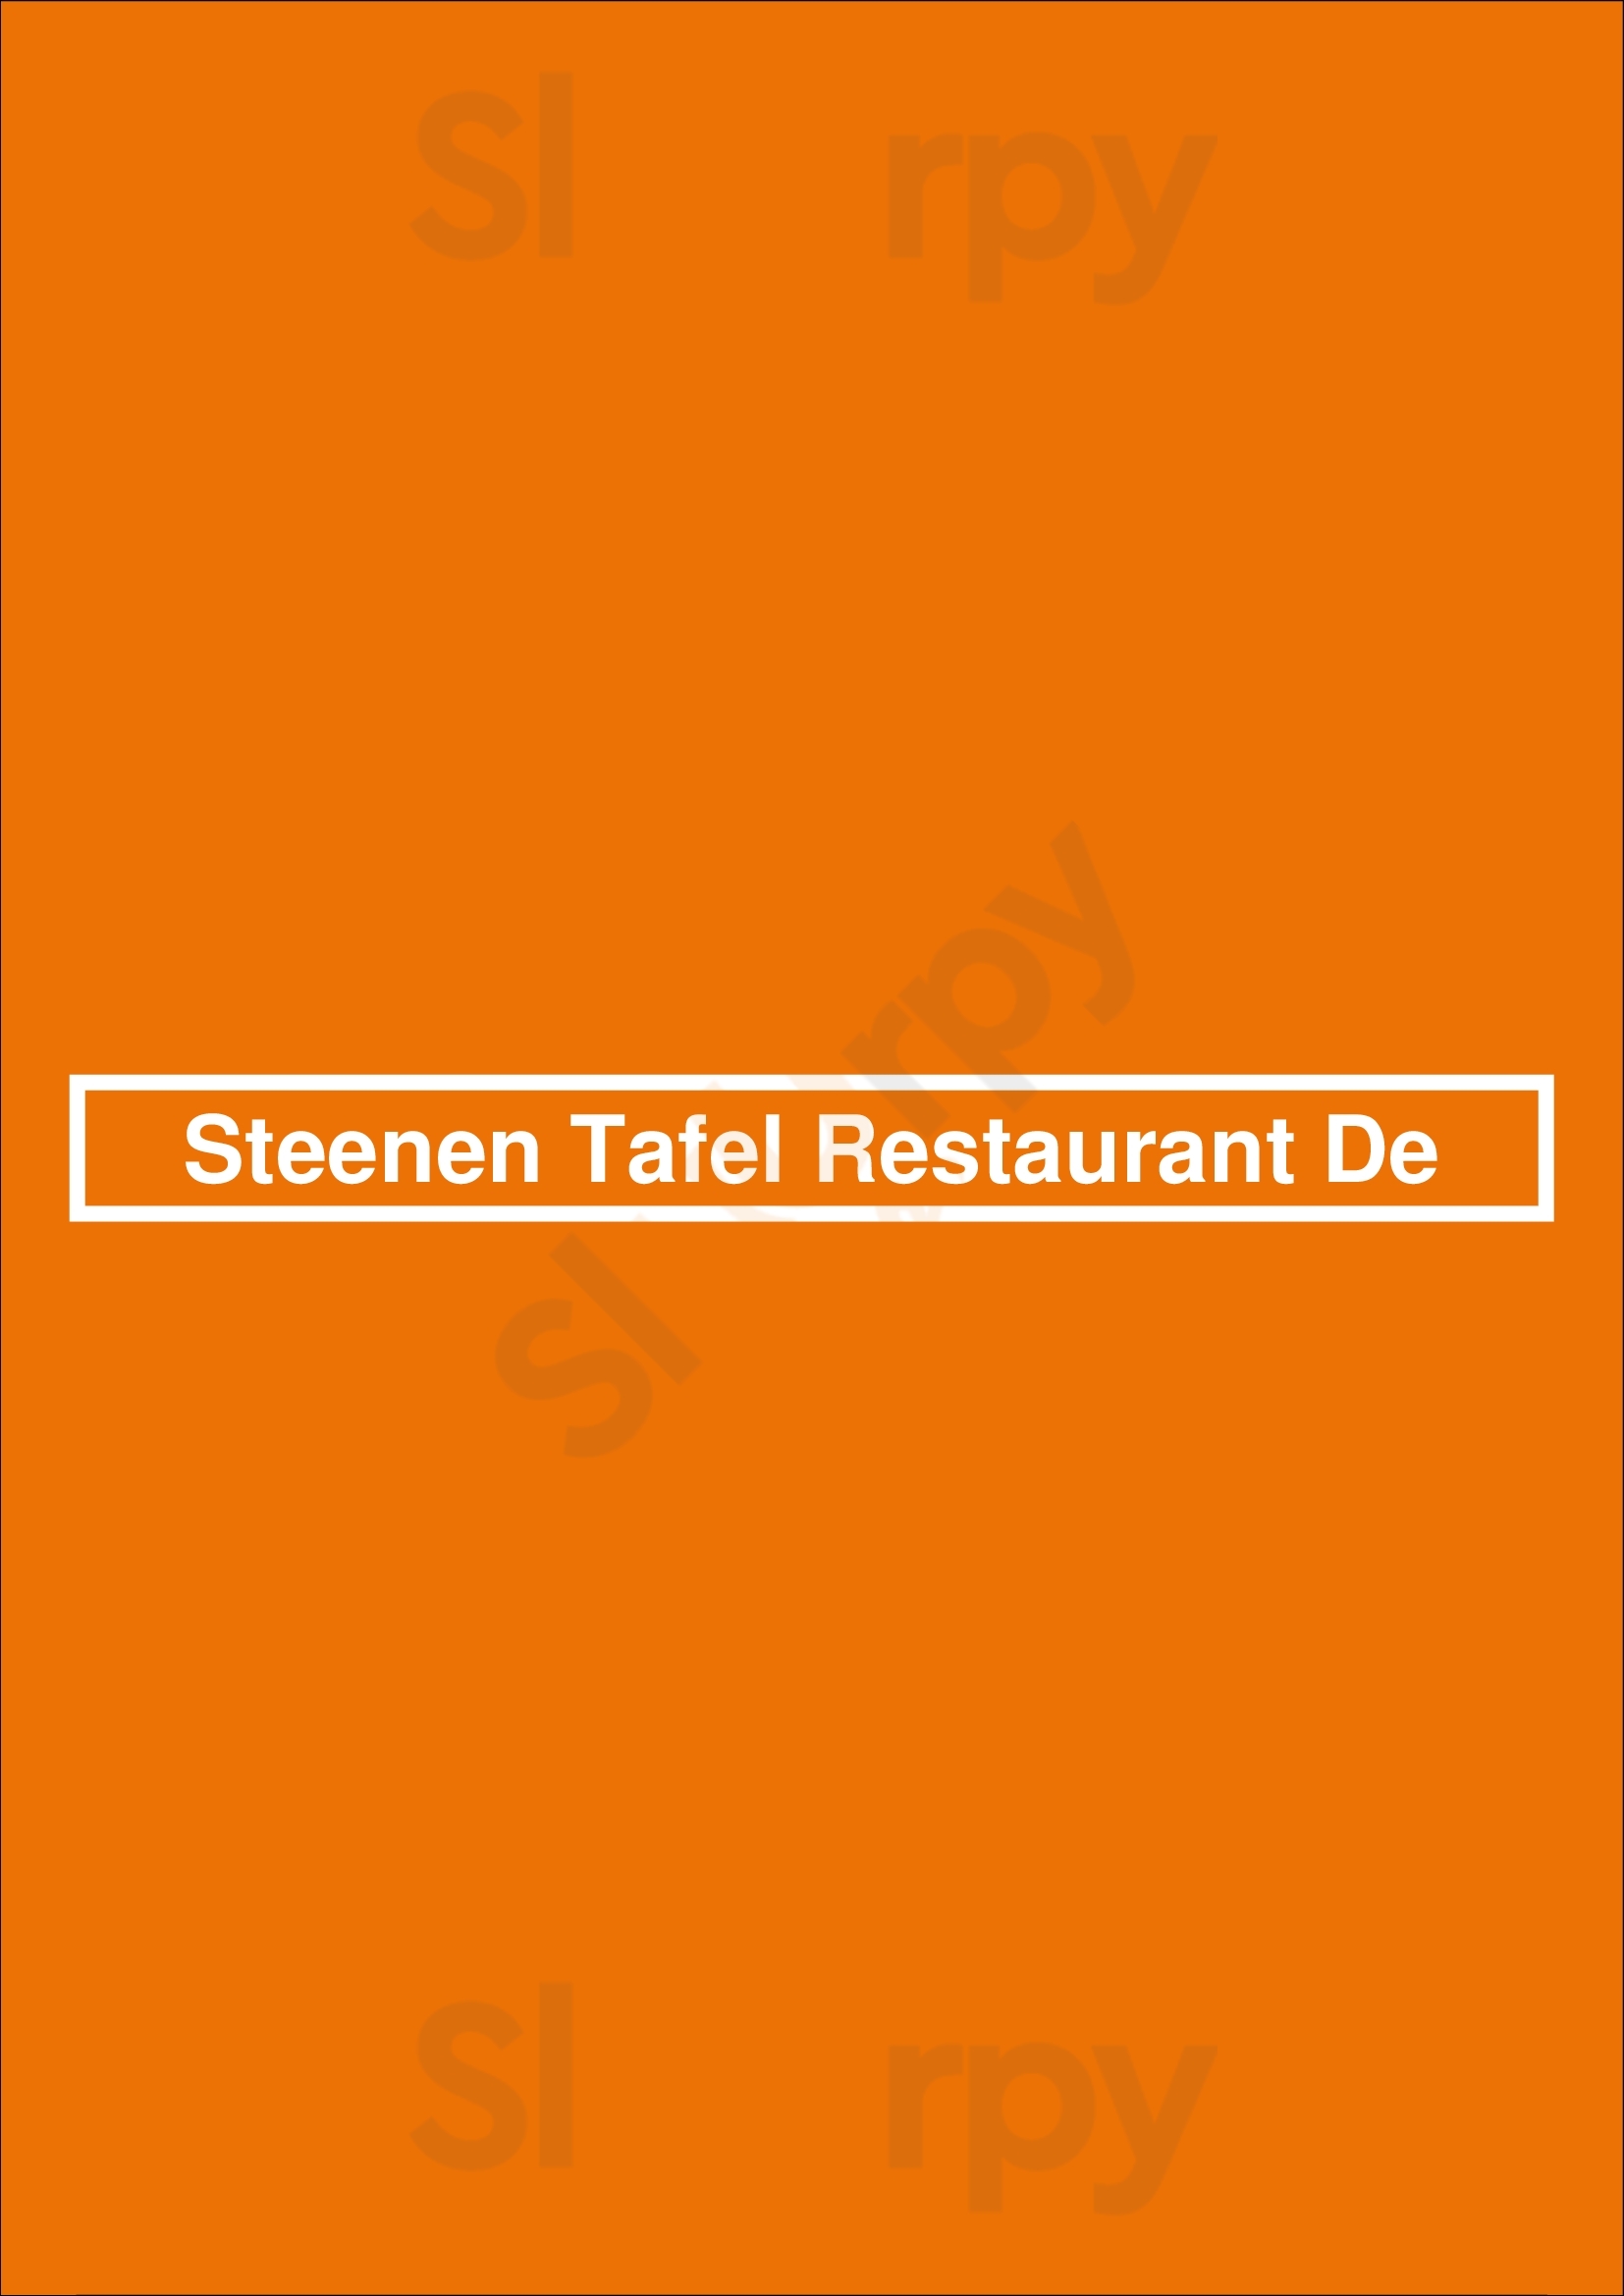 Steenen Tafel Restaurant De Arnhem Menu - 1